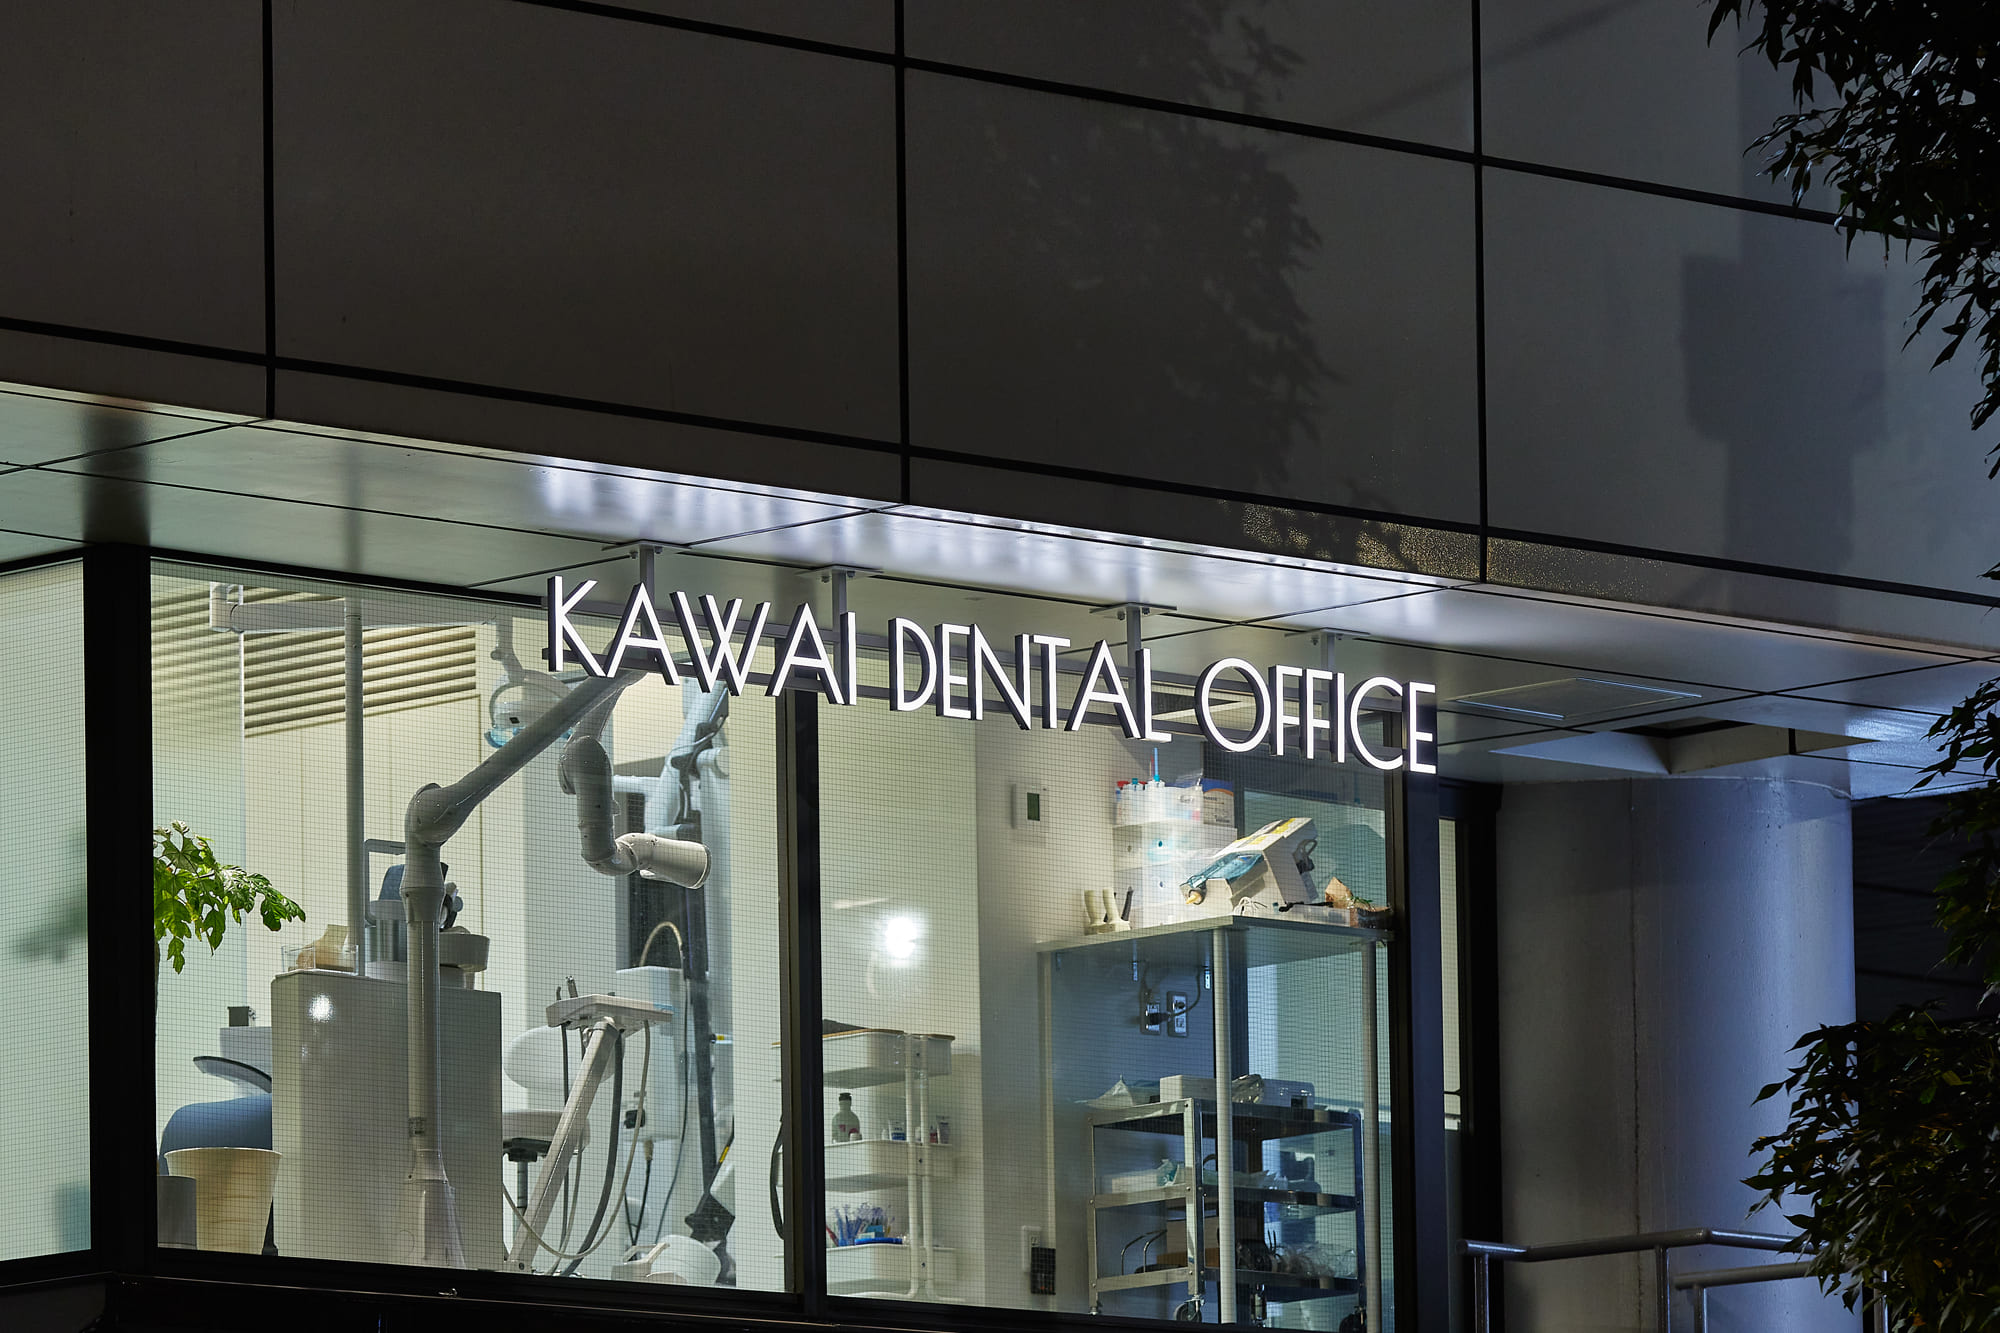 KAWAI DENTAL OFFICE